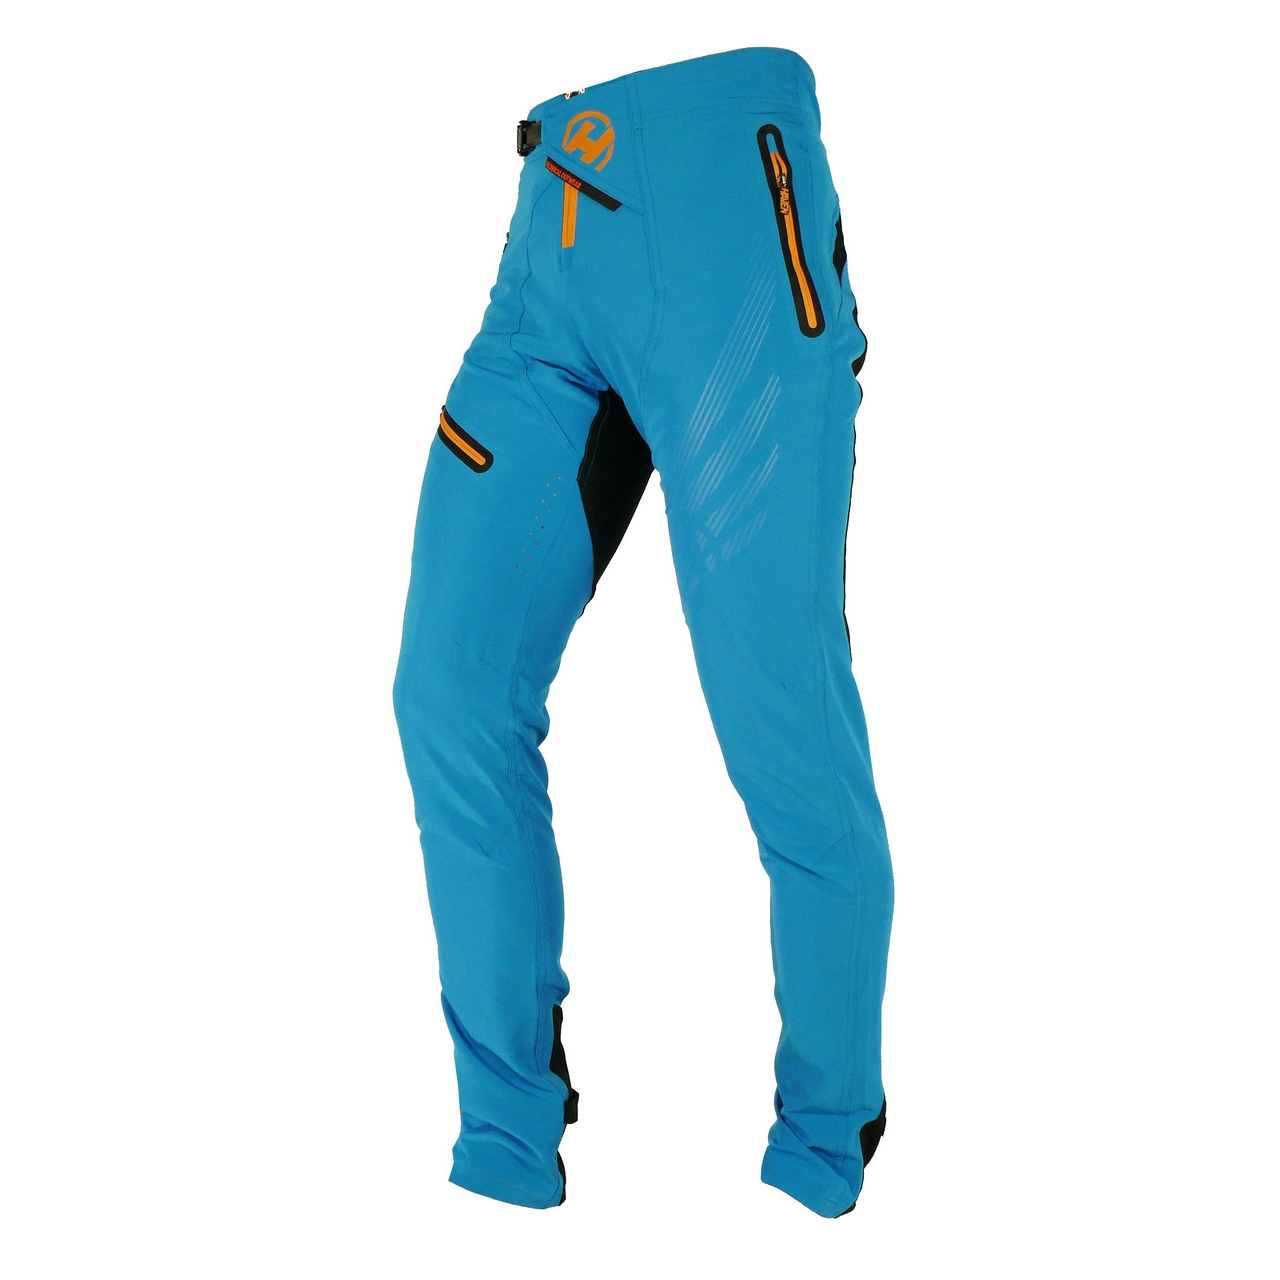 Kalhoty unisex Haven Energizer - modré-oranžové, XS